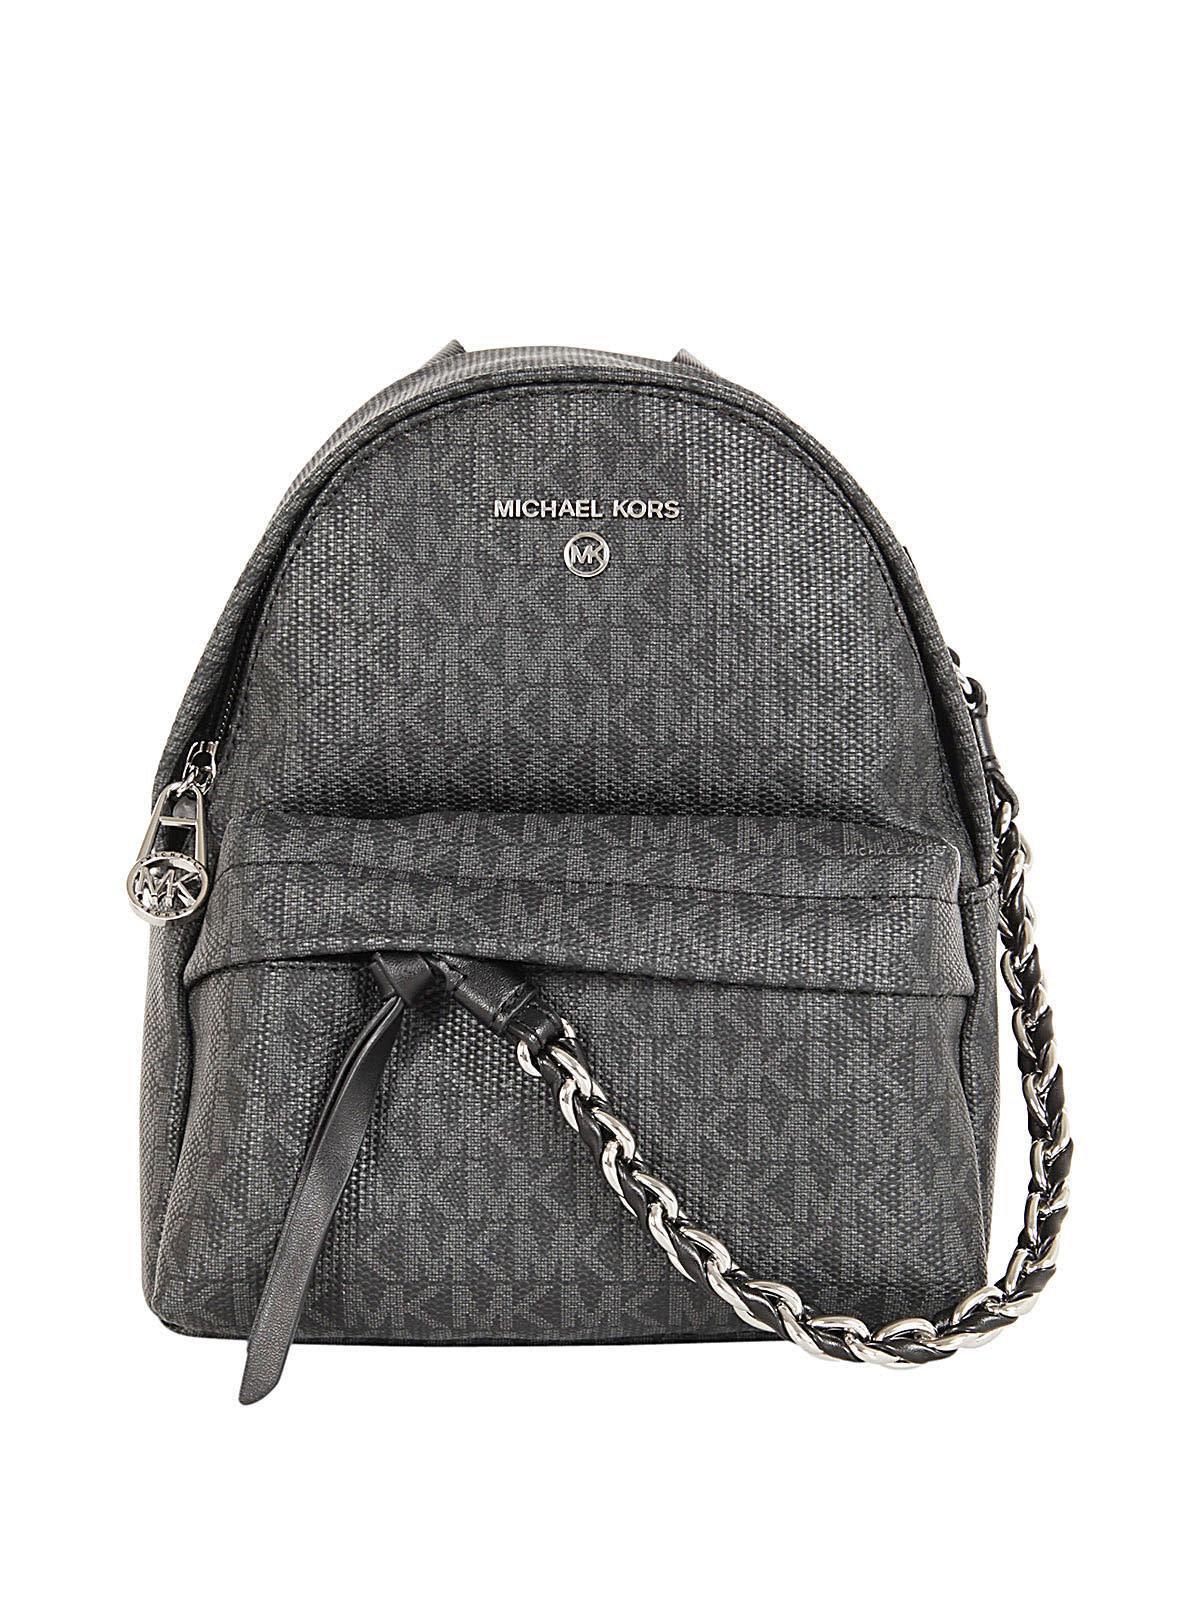 Michael Kors Black Leather Backpack